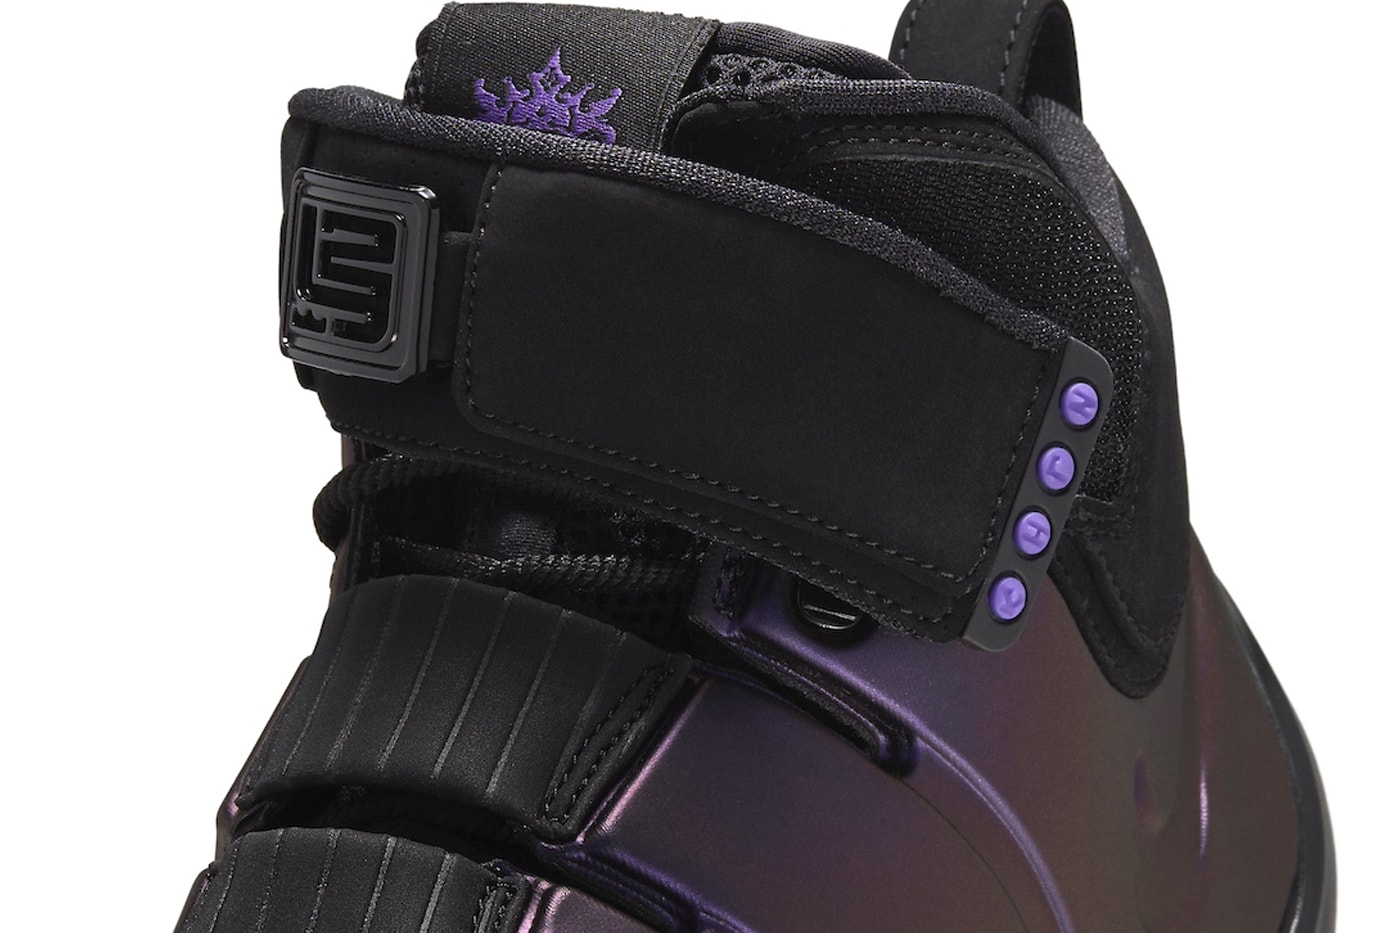 Official Look at the Nike LeBron 4 "Eggplant" Black/Varsity Purple-Blue Tint FN6251-001 lebron james king james los angeles lakers